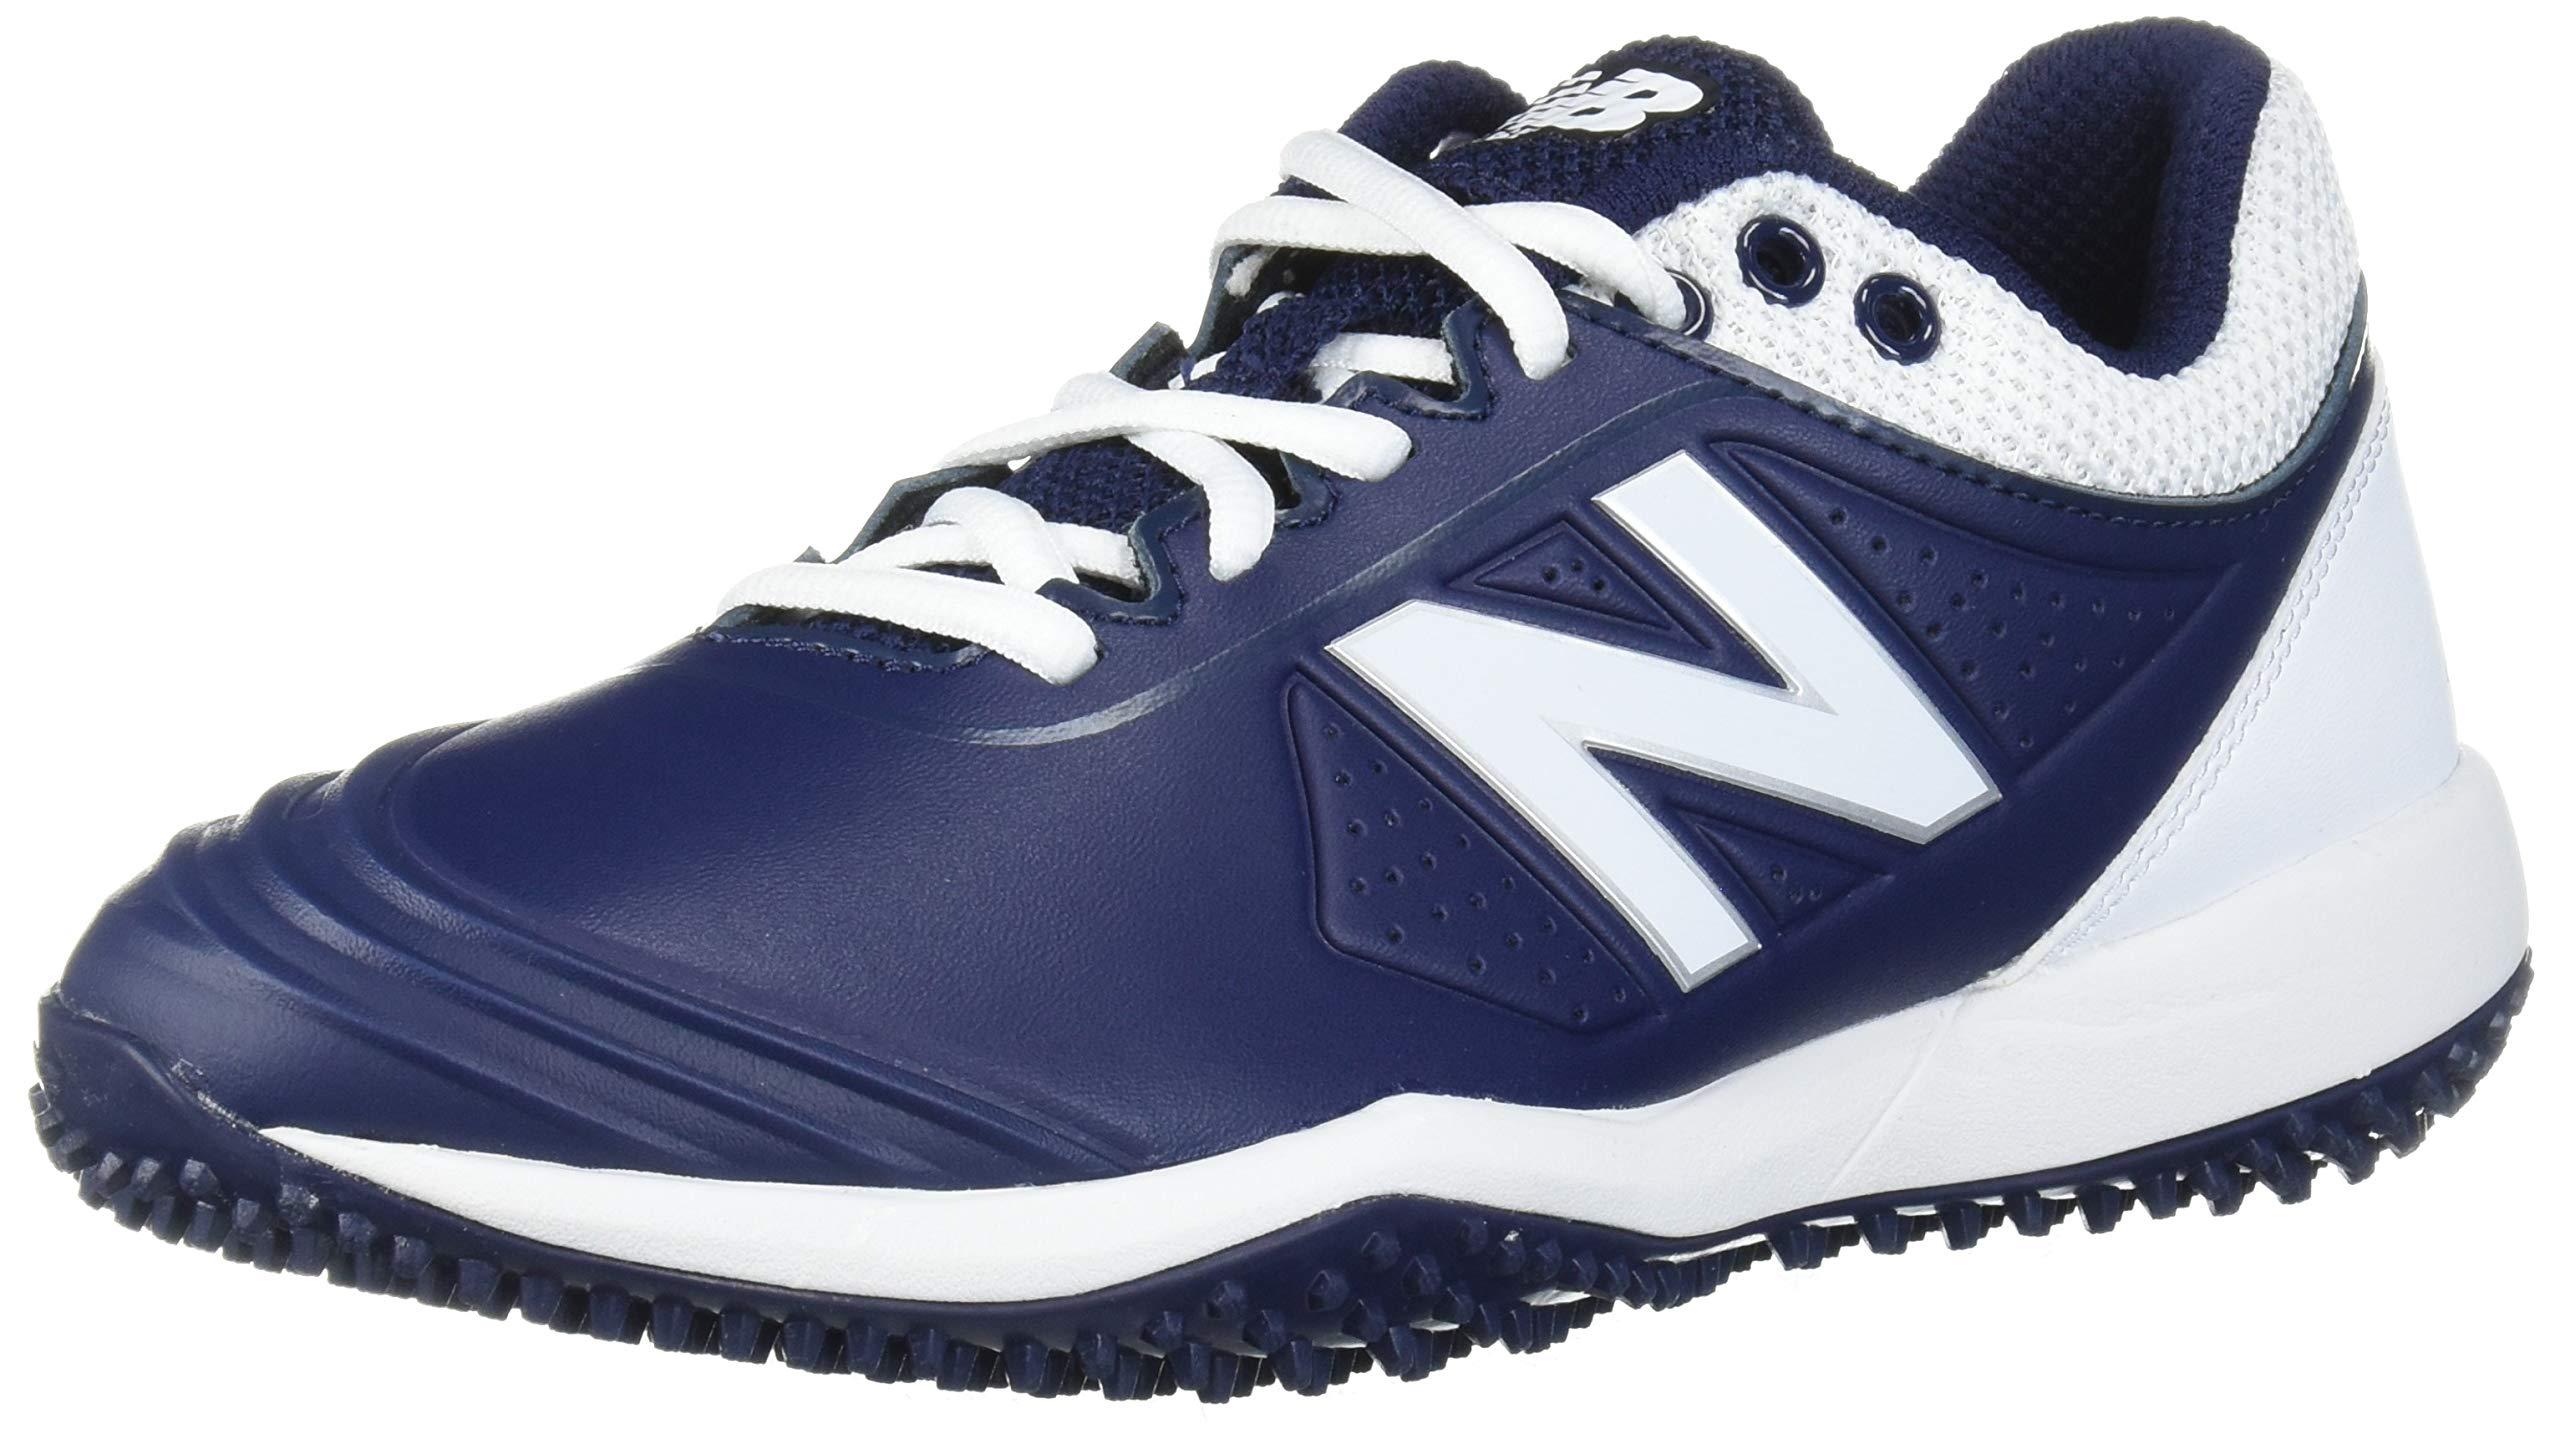 New Balance Fuse V2 Turf Baseball Shoe in Navy/White (Blue) - Save 28% |  Lyst